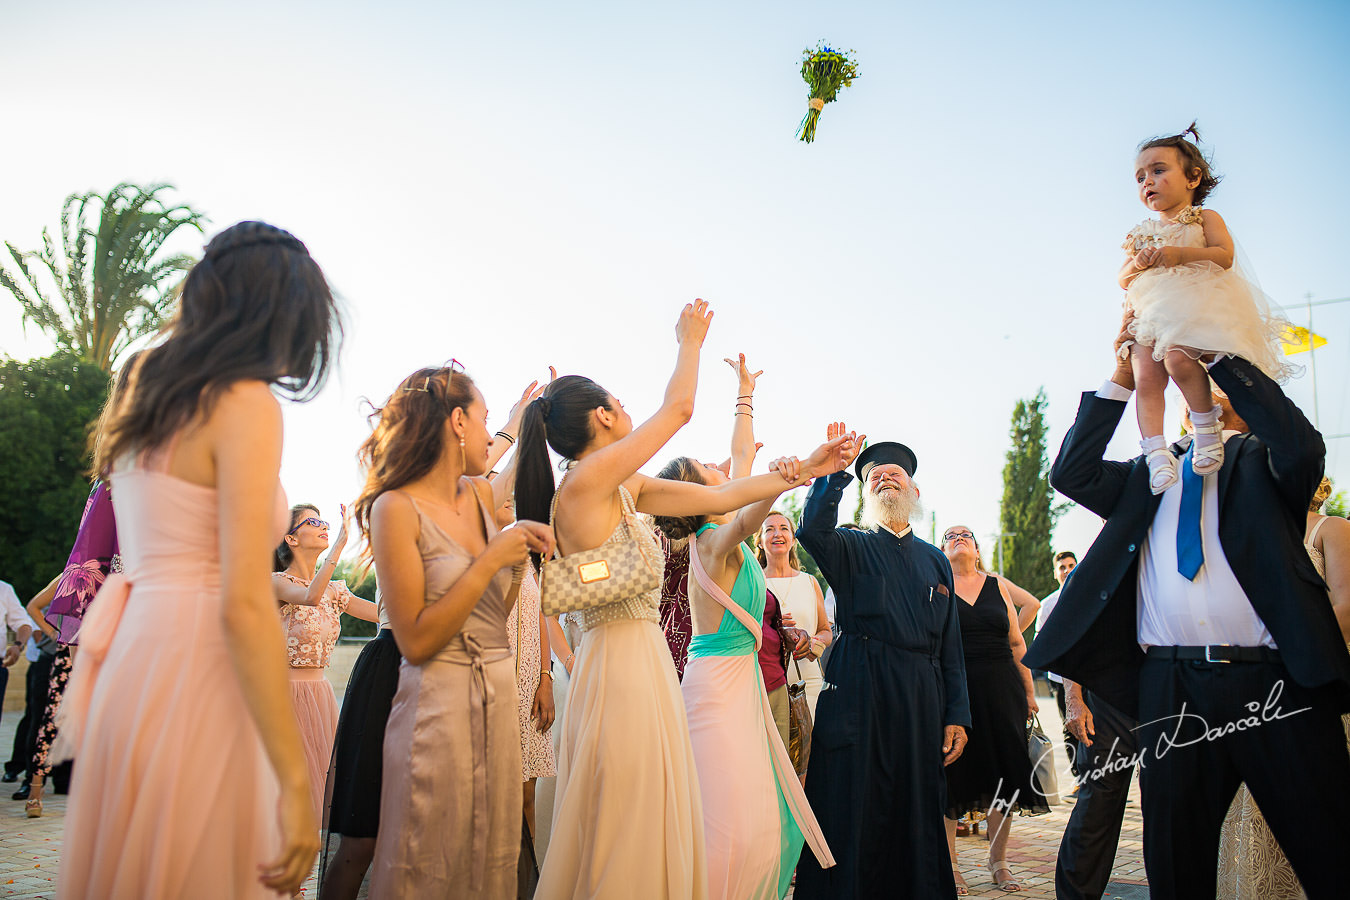 Moments captured by Cyprus Wedding Photographer Cristian Dascalu at a beautiful wedding in Larnaka, Cyprus.